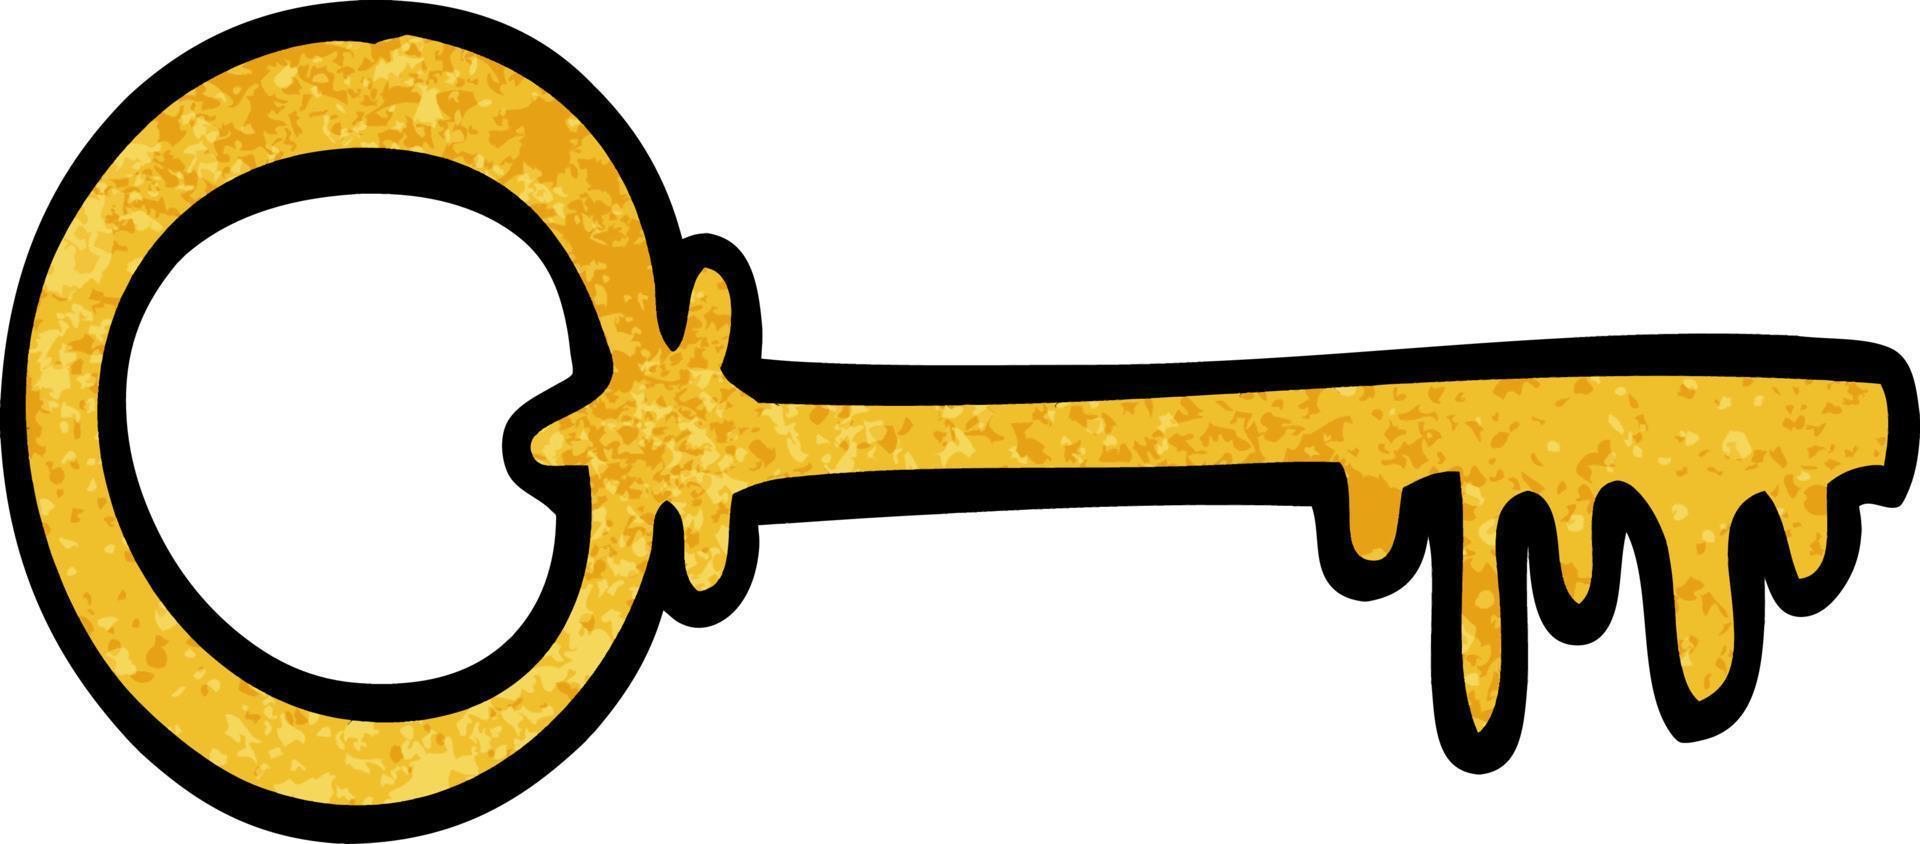 cartoon doodle key vector